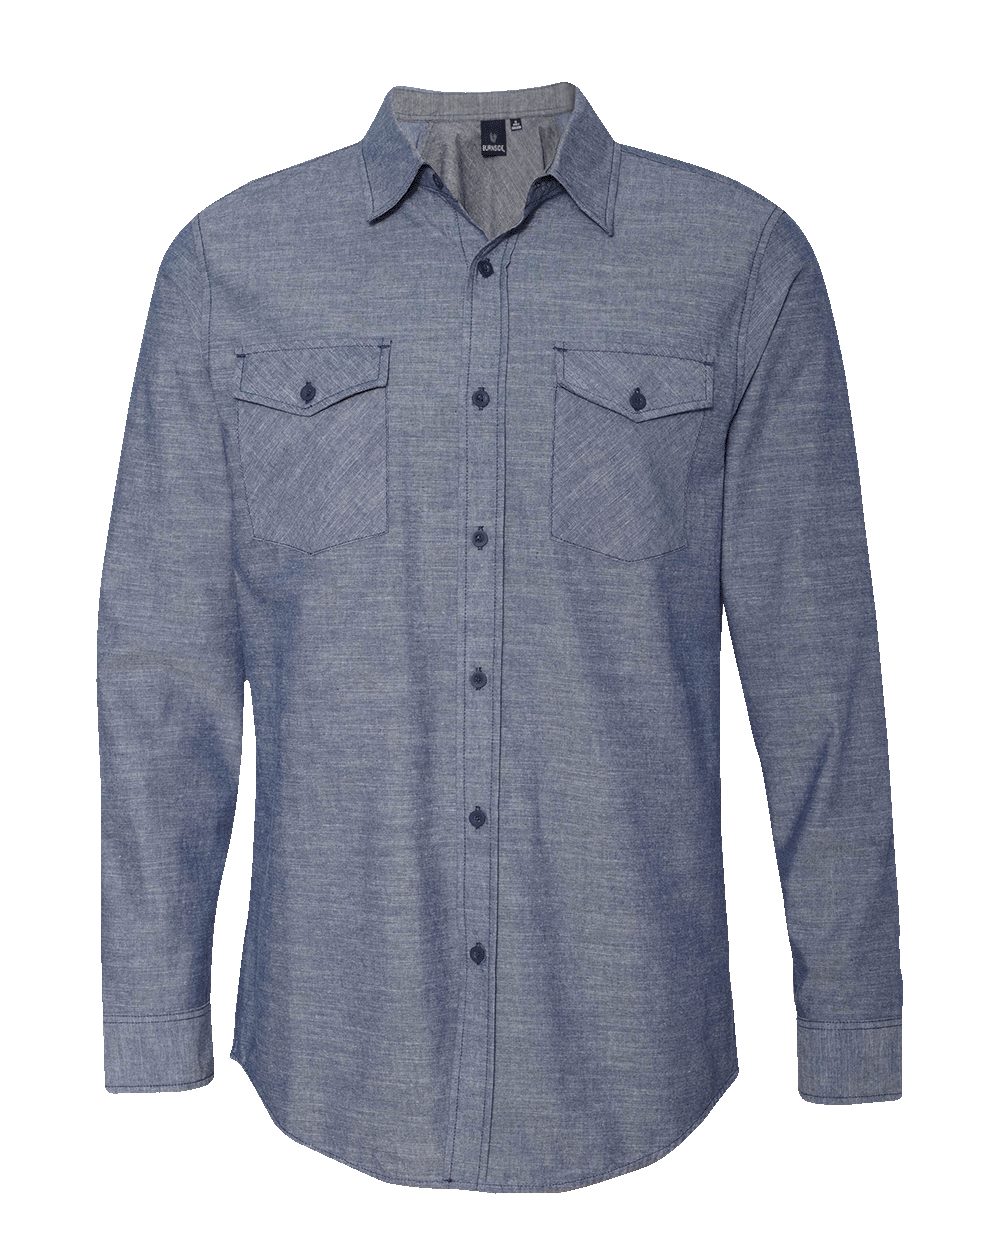 Burnside 8255 - Chambray Long Sleeve Shirt